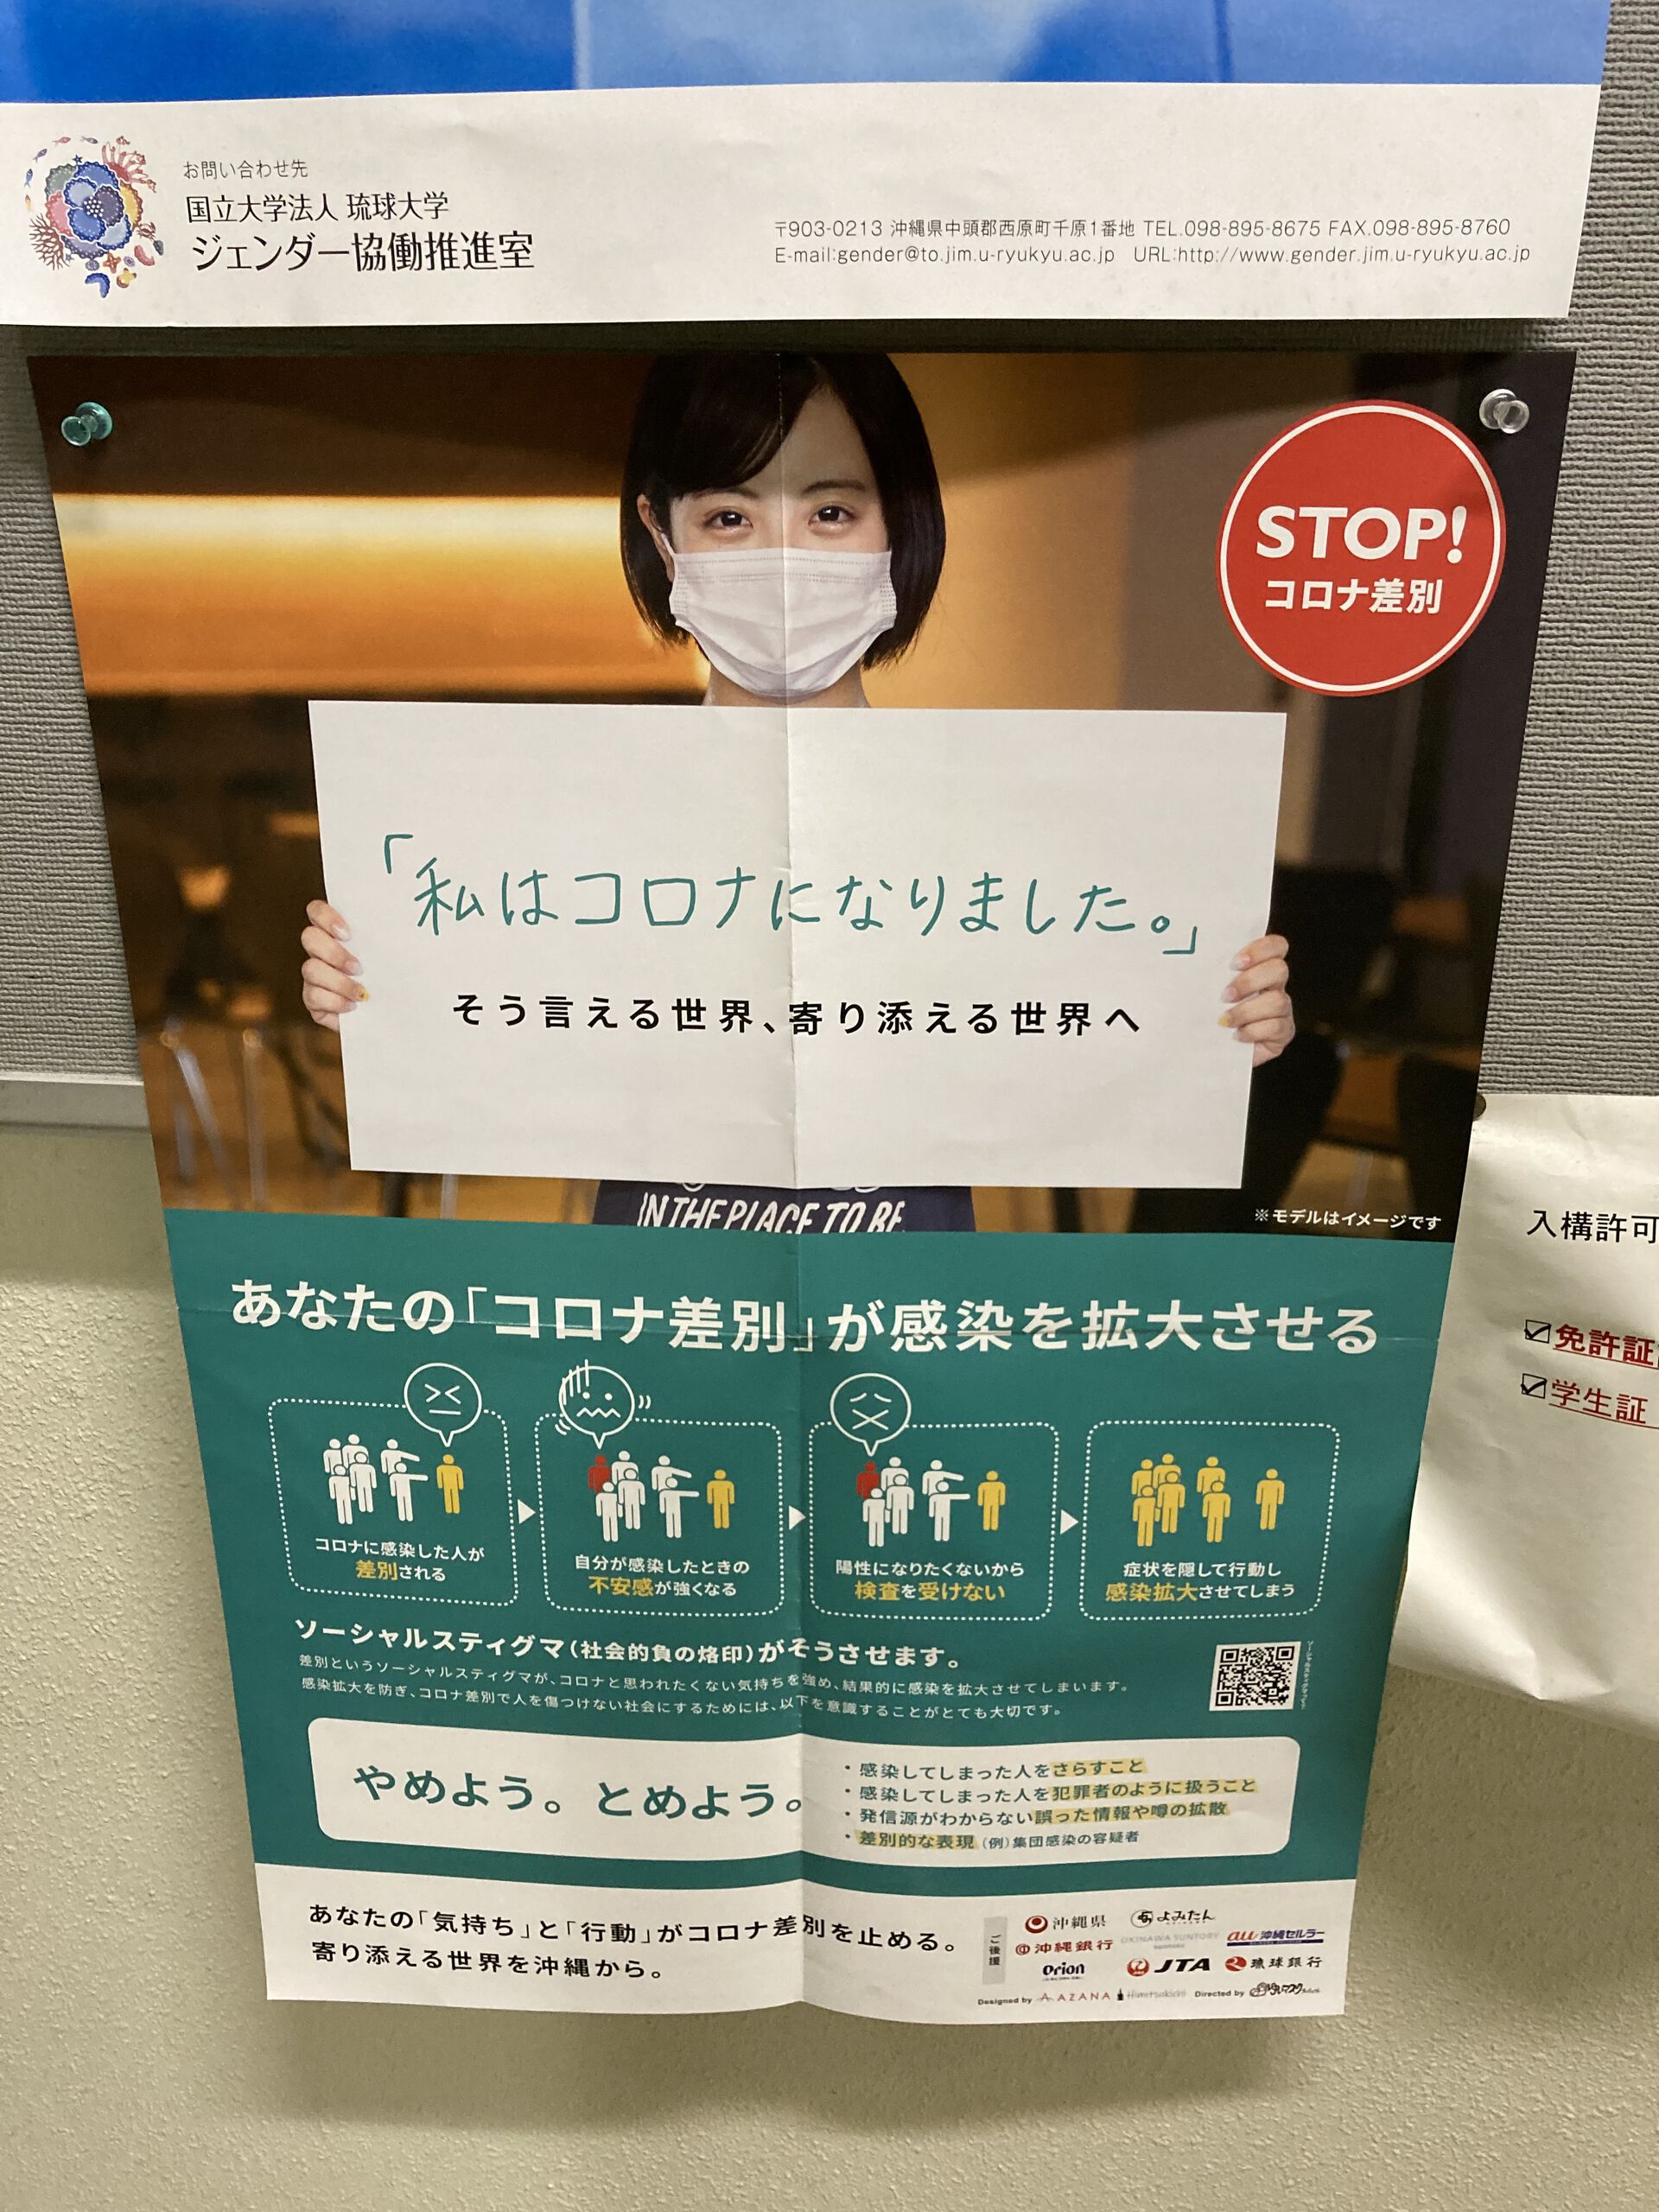 Poster against corona discrimination